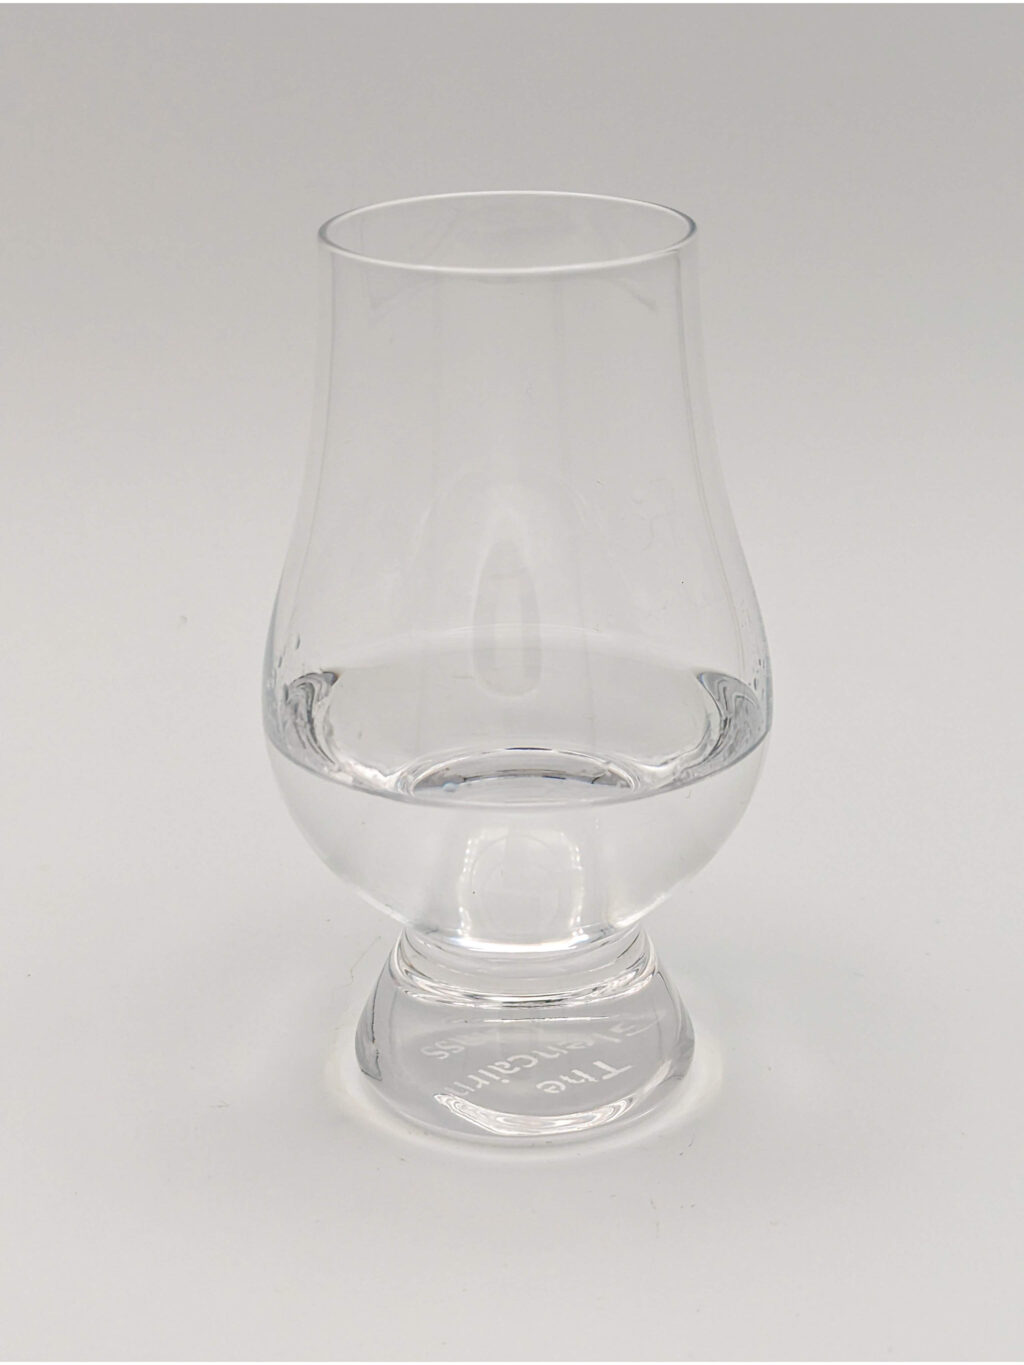 Clear glass in a glencairn glass